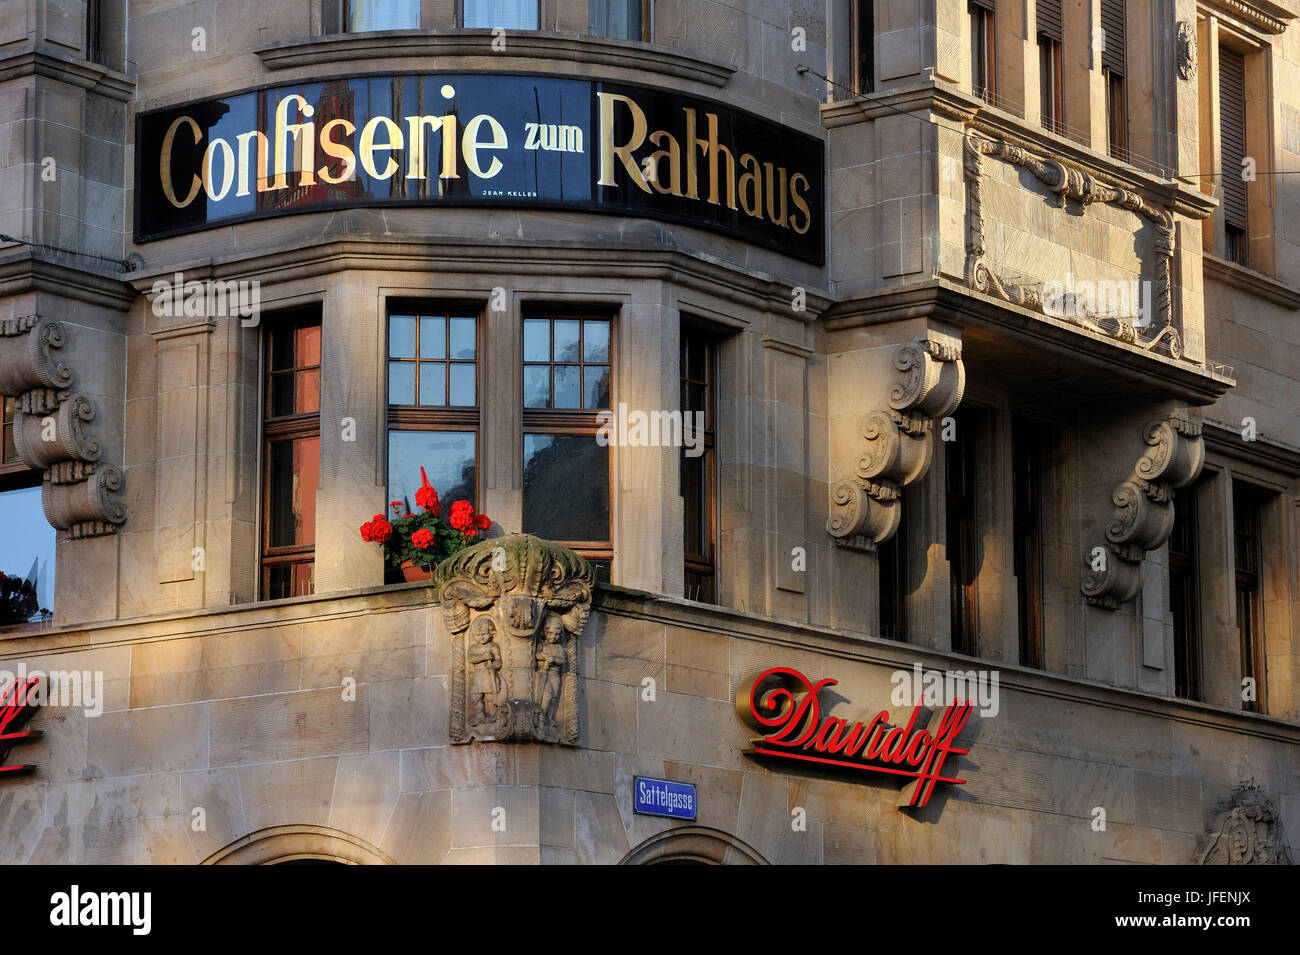 Switzerland, Basel, old city, Marktplatz (Market square), Cafe and tearoom  Schiesser Stock Photo - Alamy